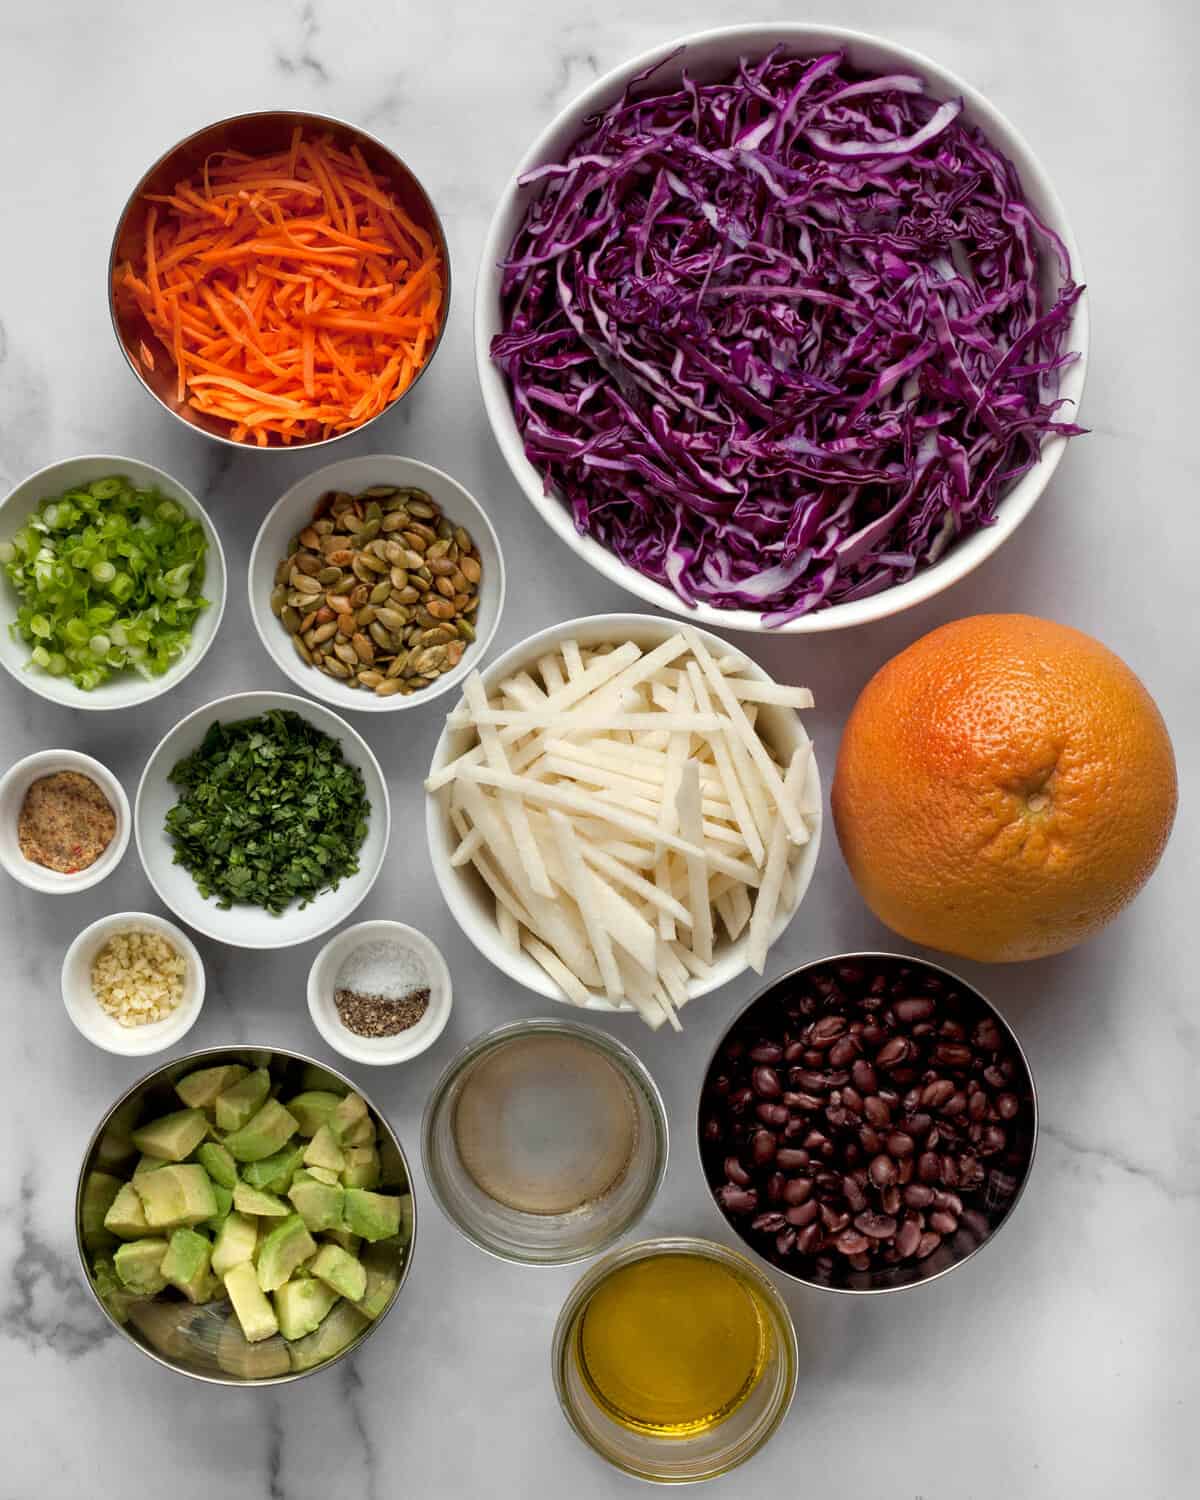 Ingredients for salad including jicama, cabbage, carrots, grapefruit, black beans, avocado, cilantro and pepitas.